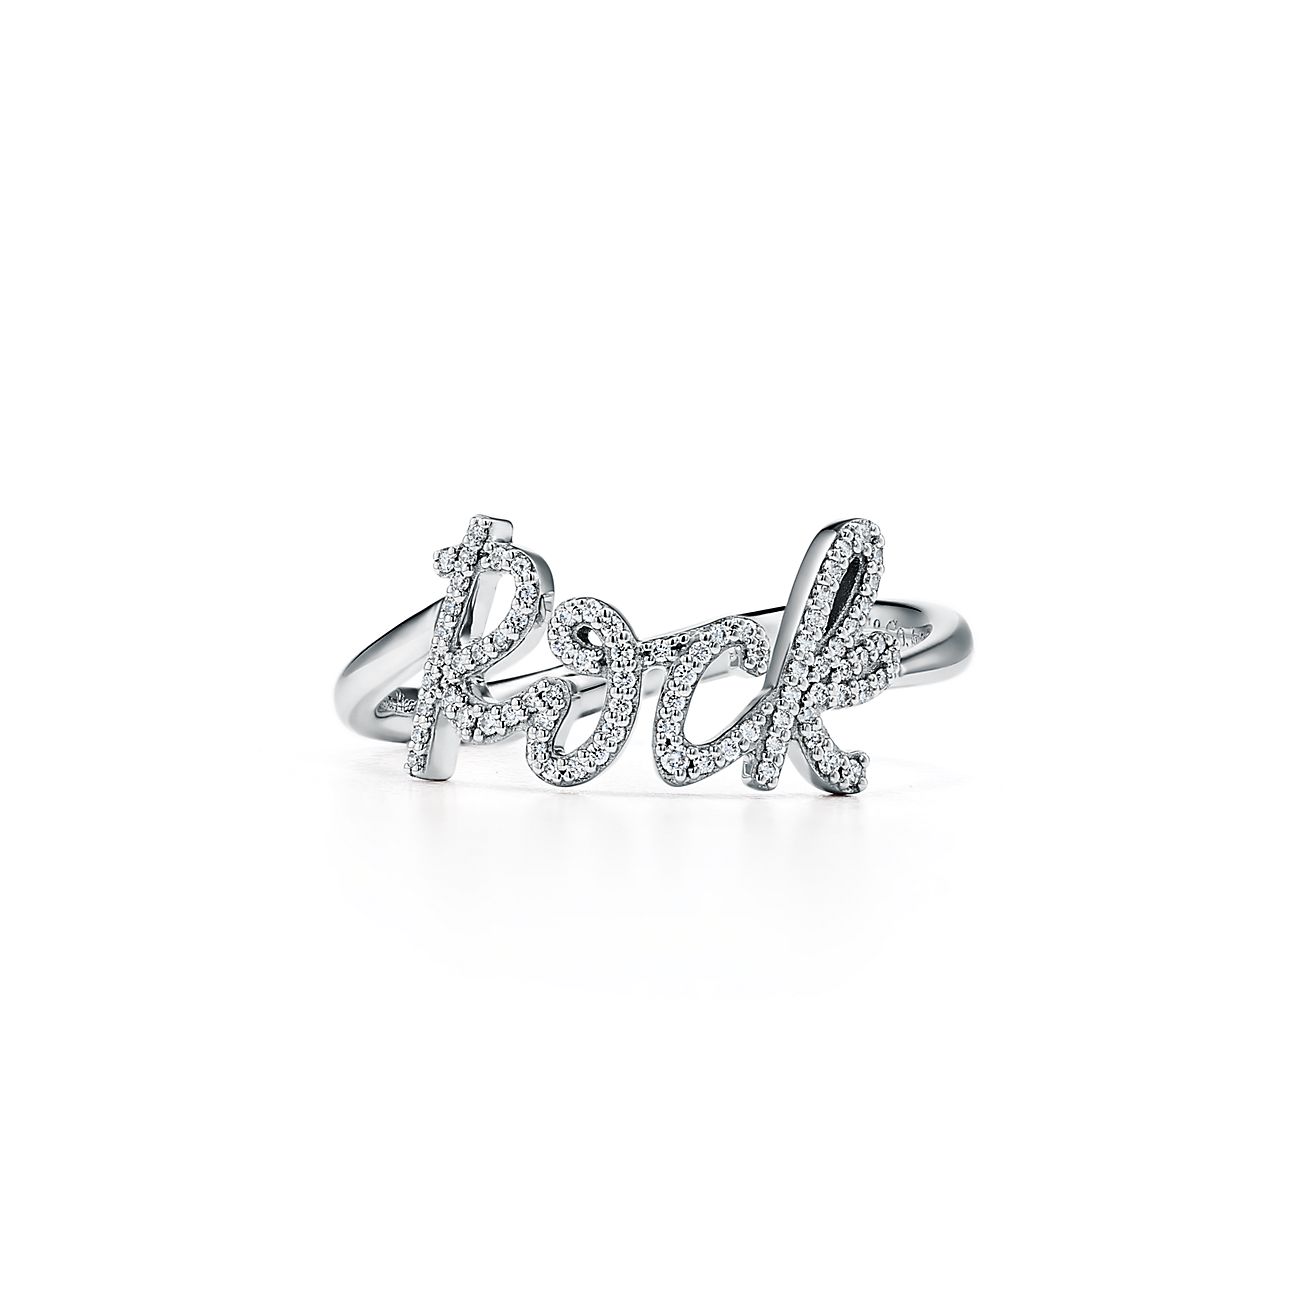 Paloma's Graffiti Rock Ring